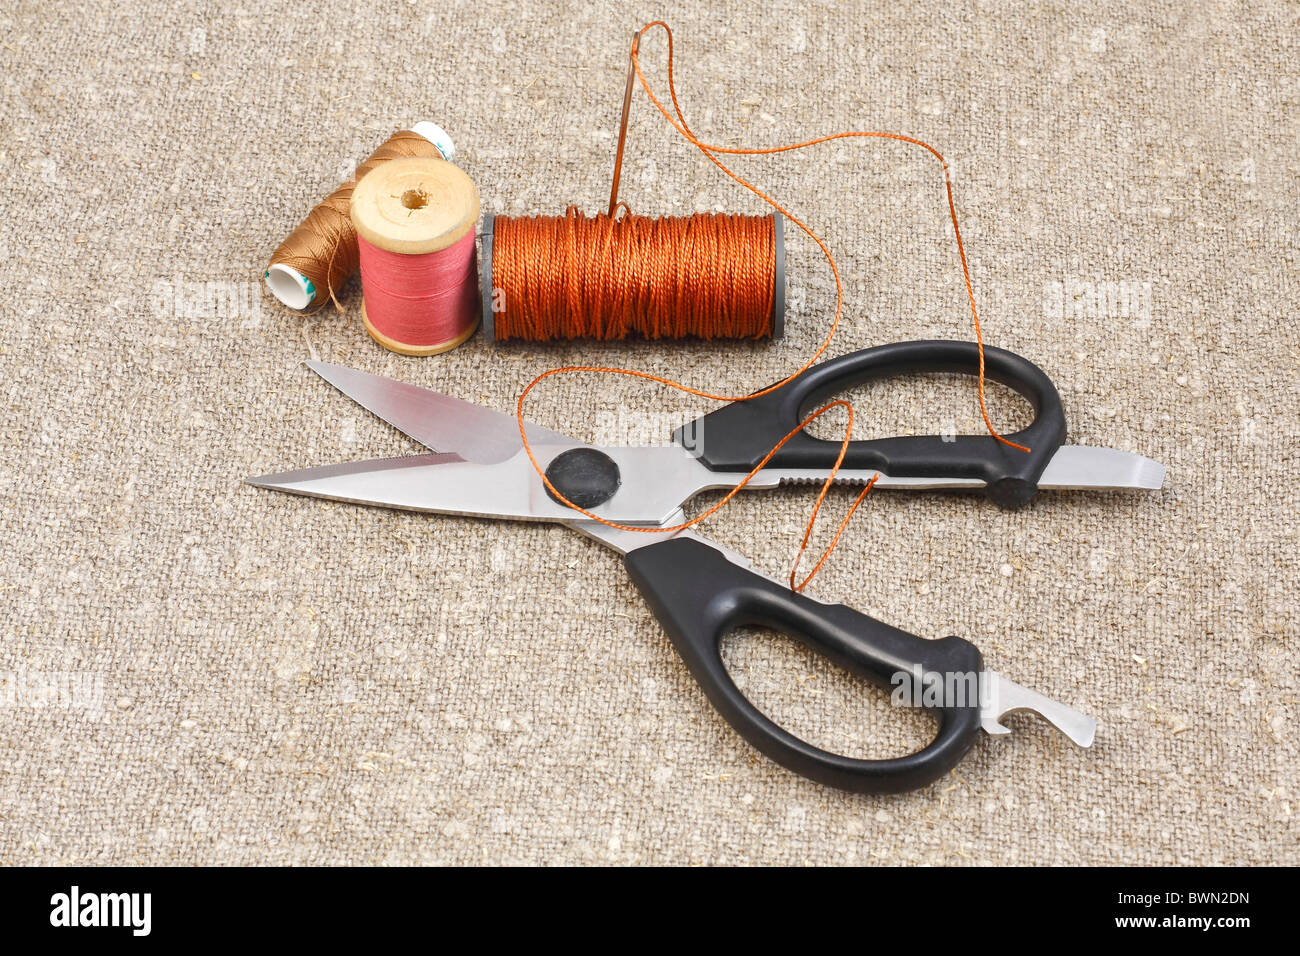 scissors, needle and thread on canvas of mats Stock Photo